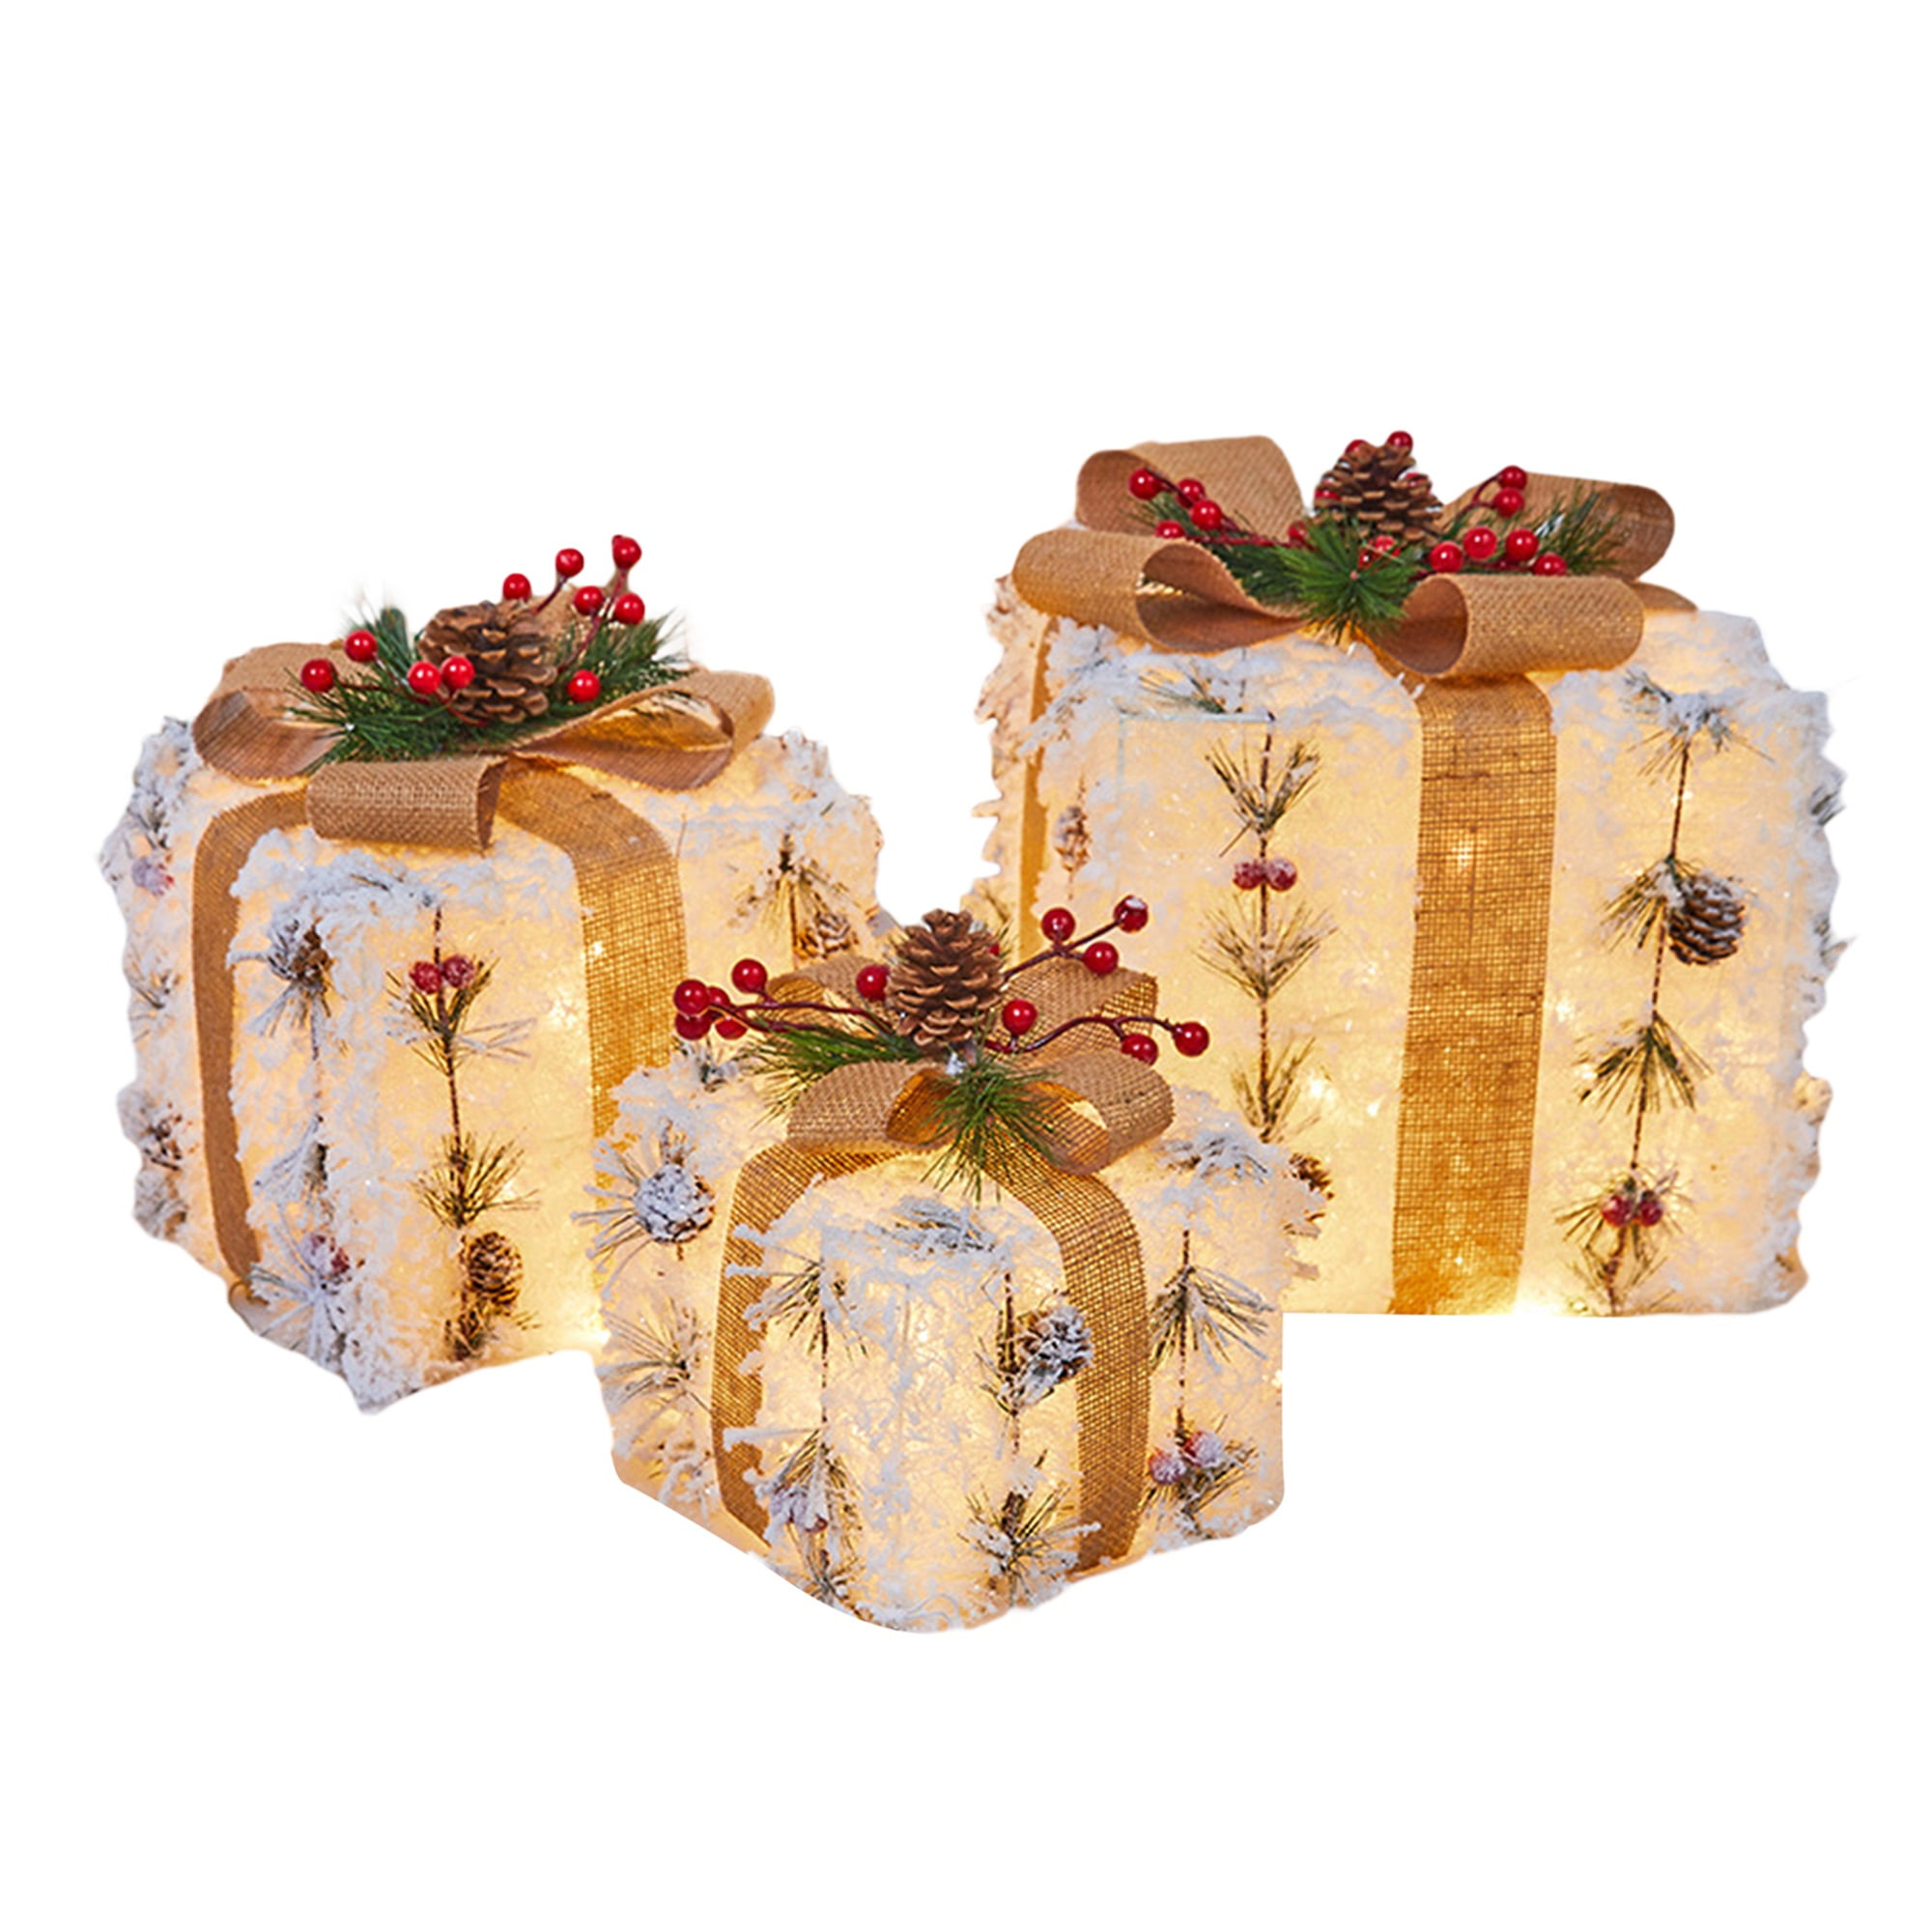 DD Christmas Luminous Gift Box Light String Indoor Decoration Outdoor  Waterproof Christmas Day Light Gift Box Snow Gift Box